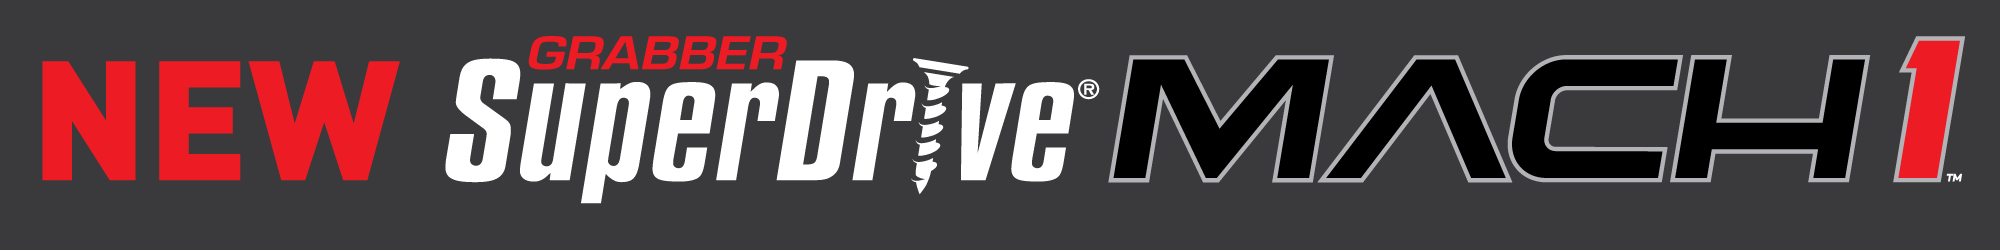 New SuperDrive Mach1 logo